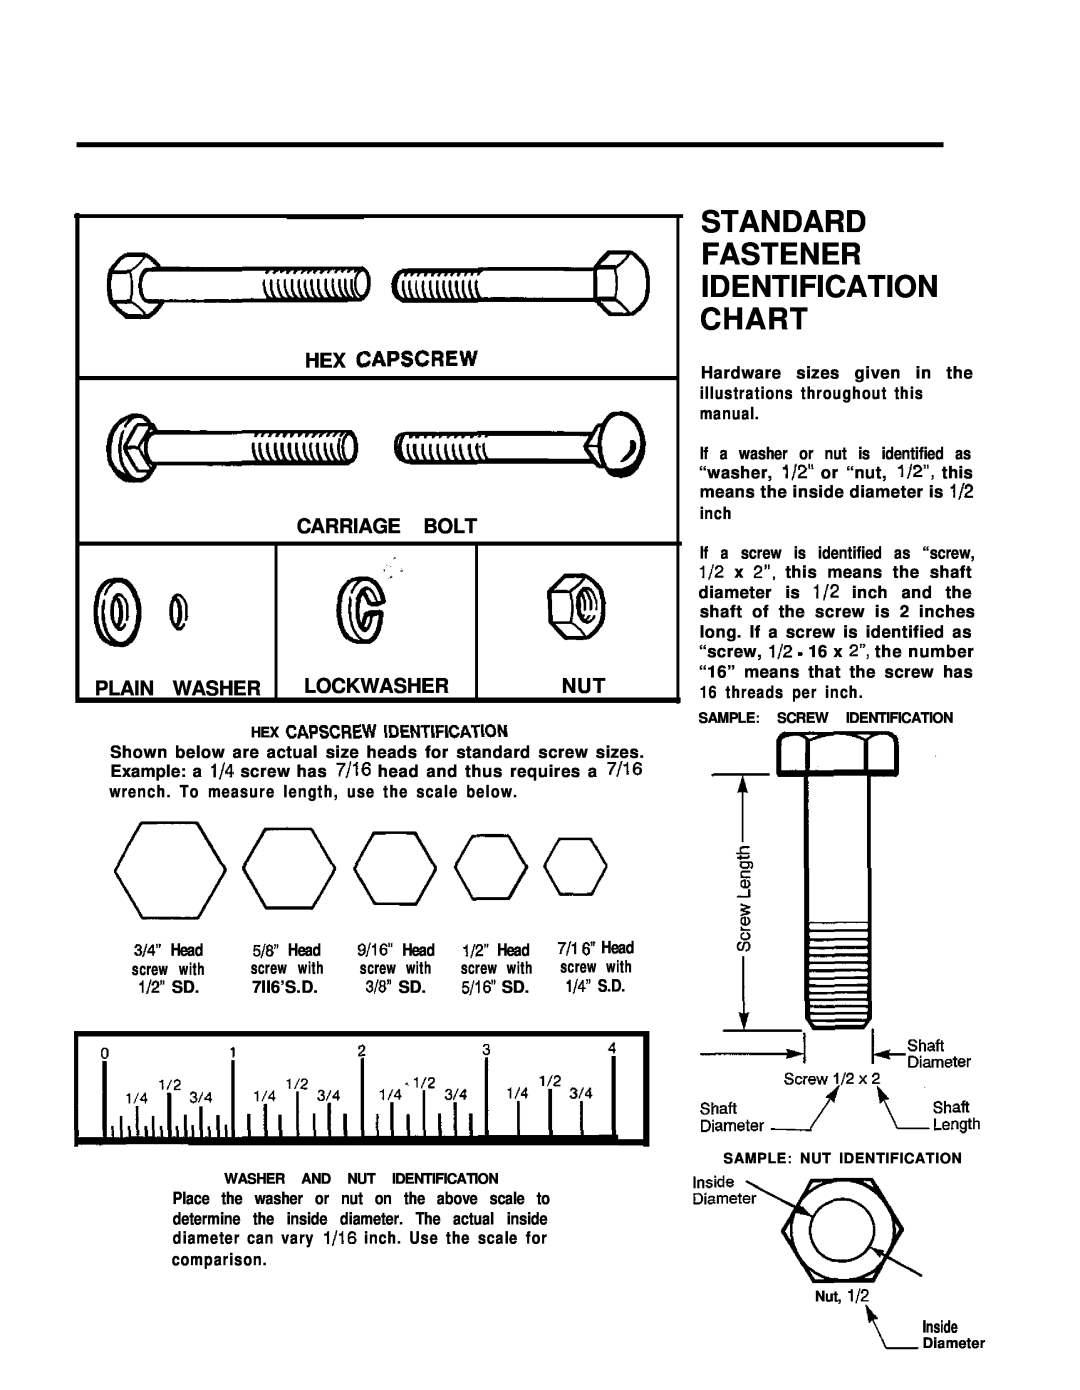 Simplicity 1692244 Standard Fastener Identification Chart, Hex Capscrew Carriage Bolt, Plain Washer, 00000, Lockwasher 